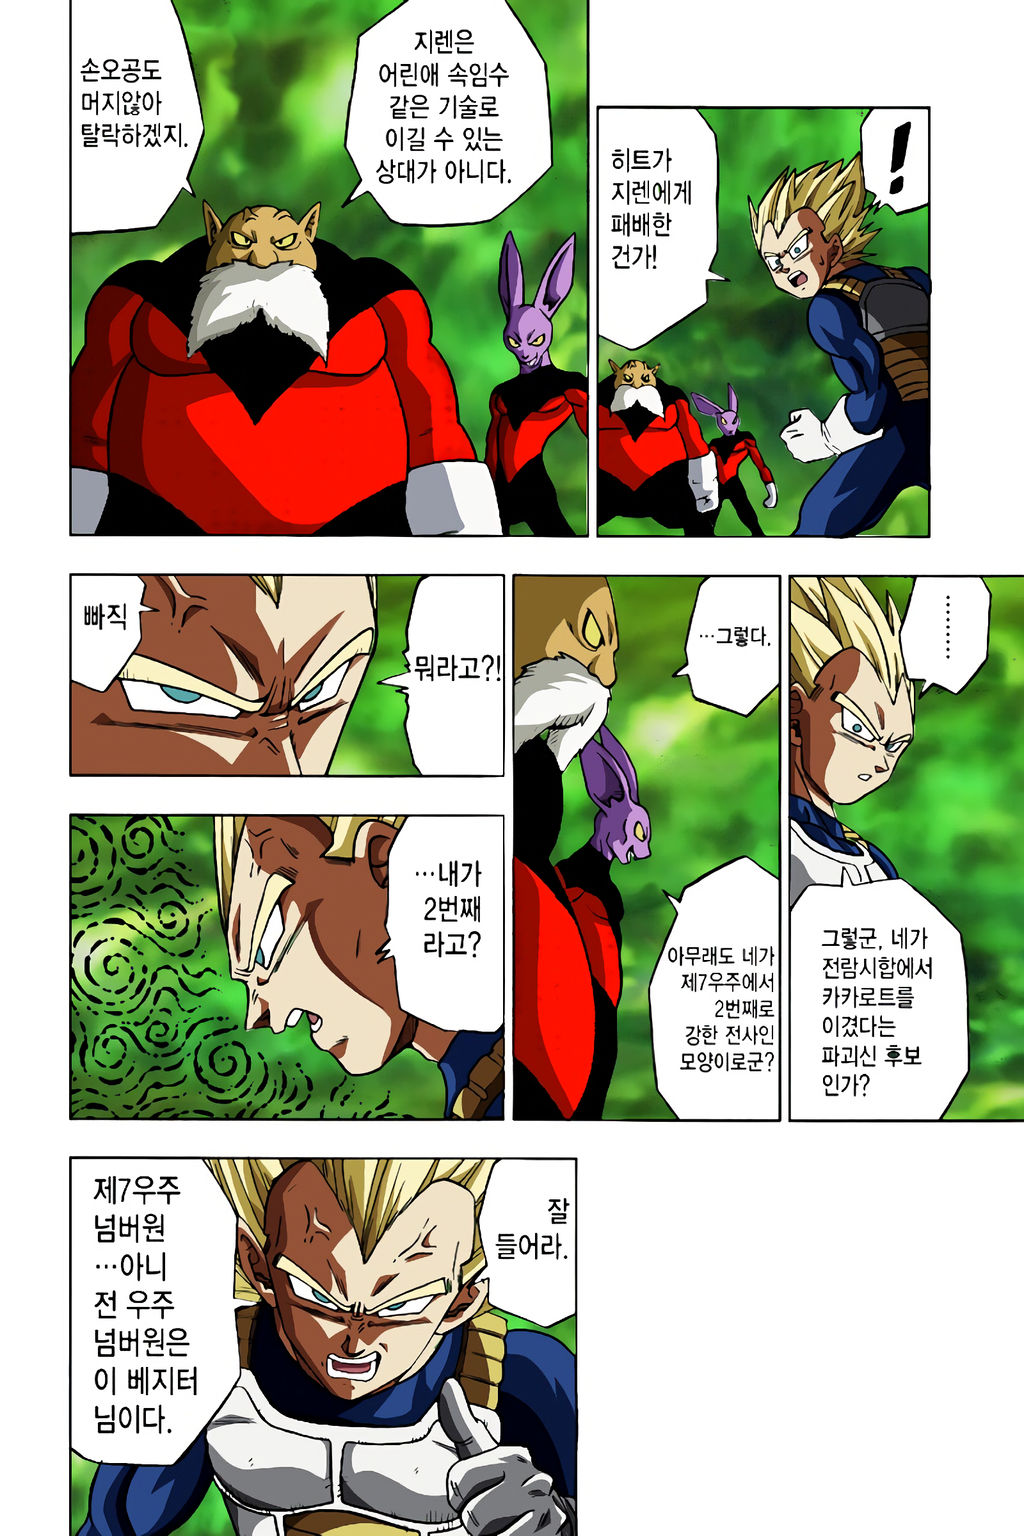 Manga Dragon Ball Super by EliasPlusPro on DeviantArt